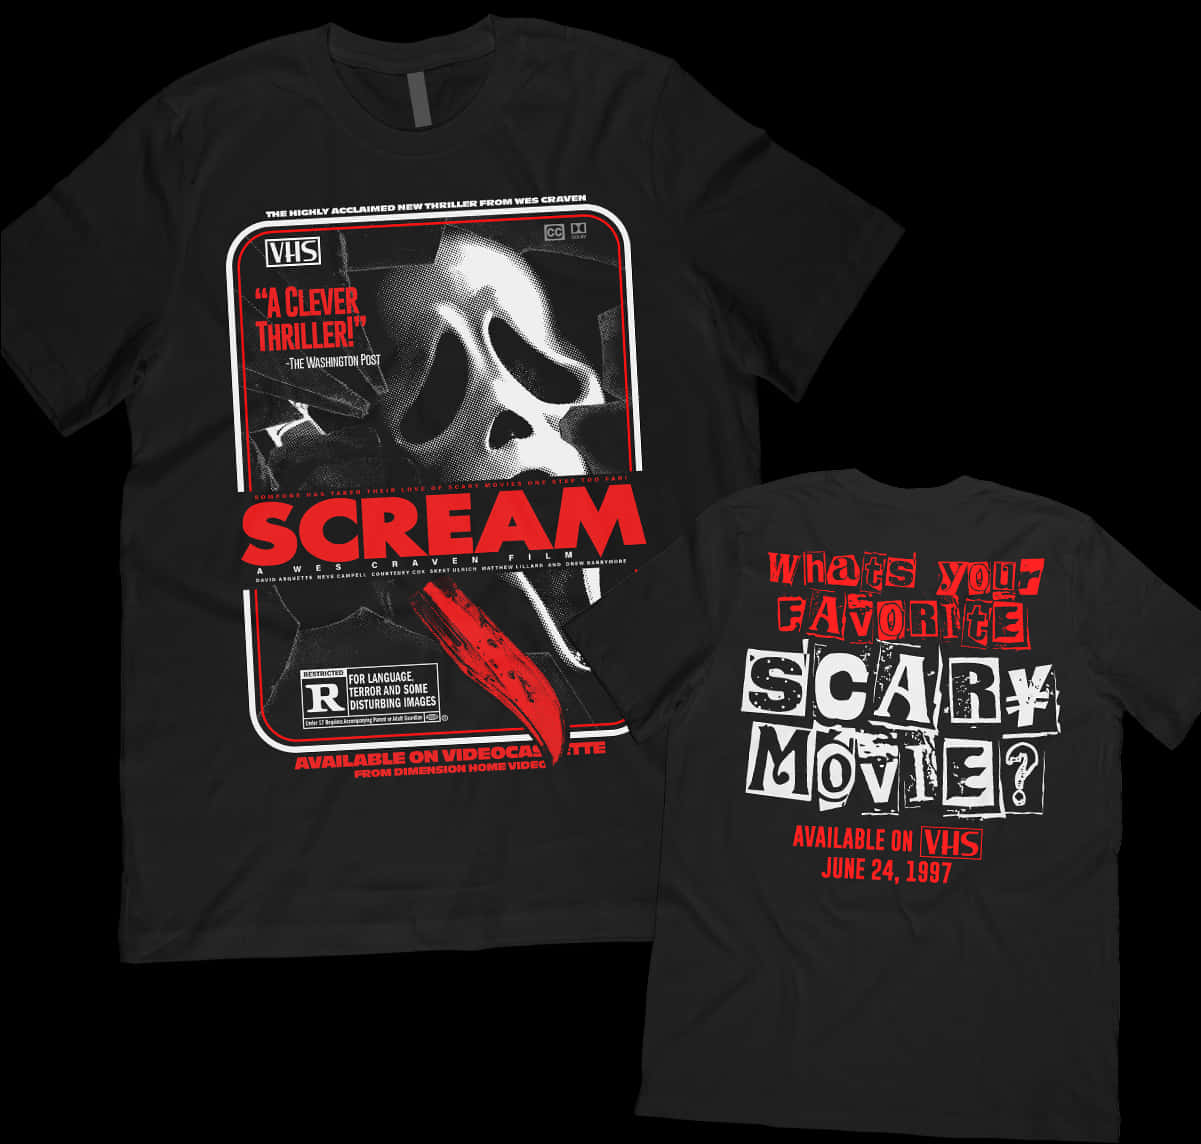 Black Shirts With Scream Print